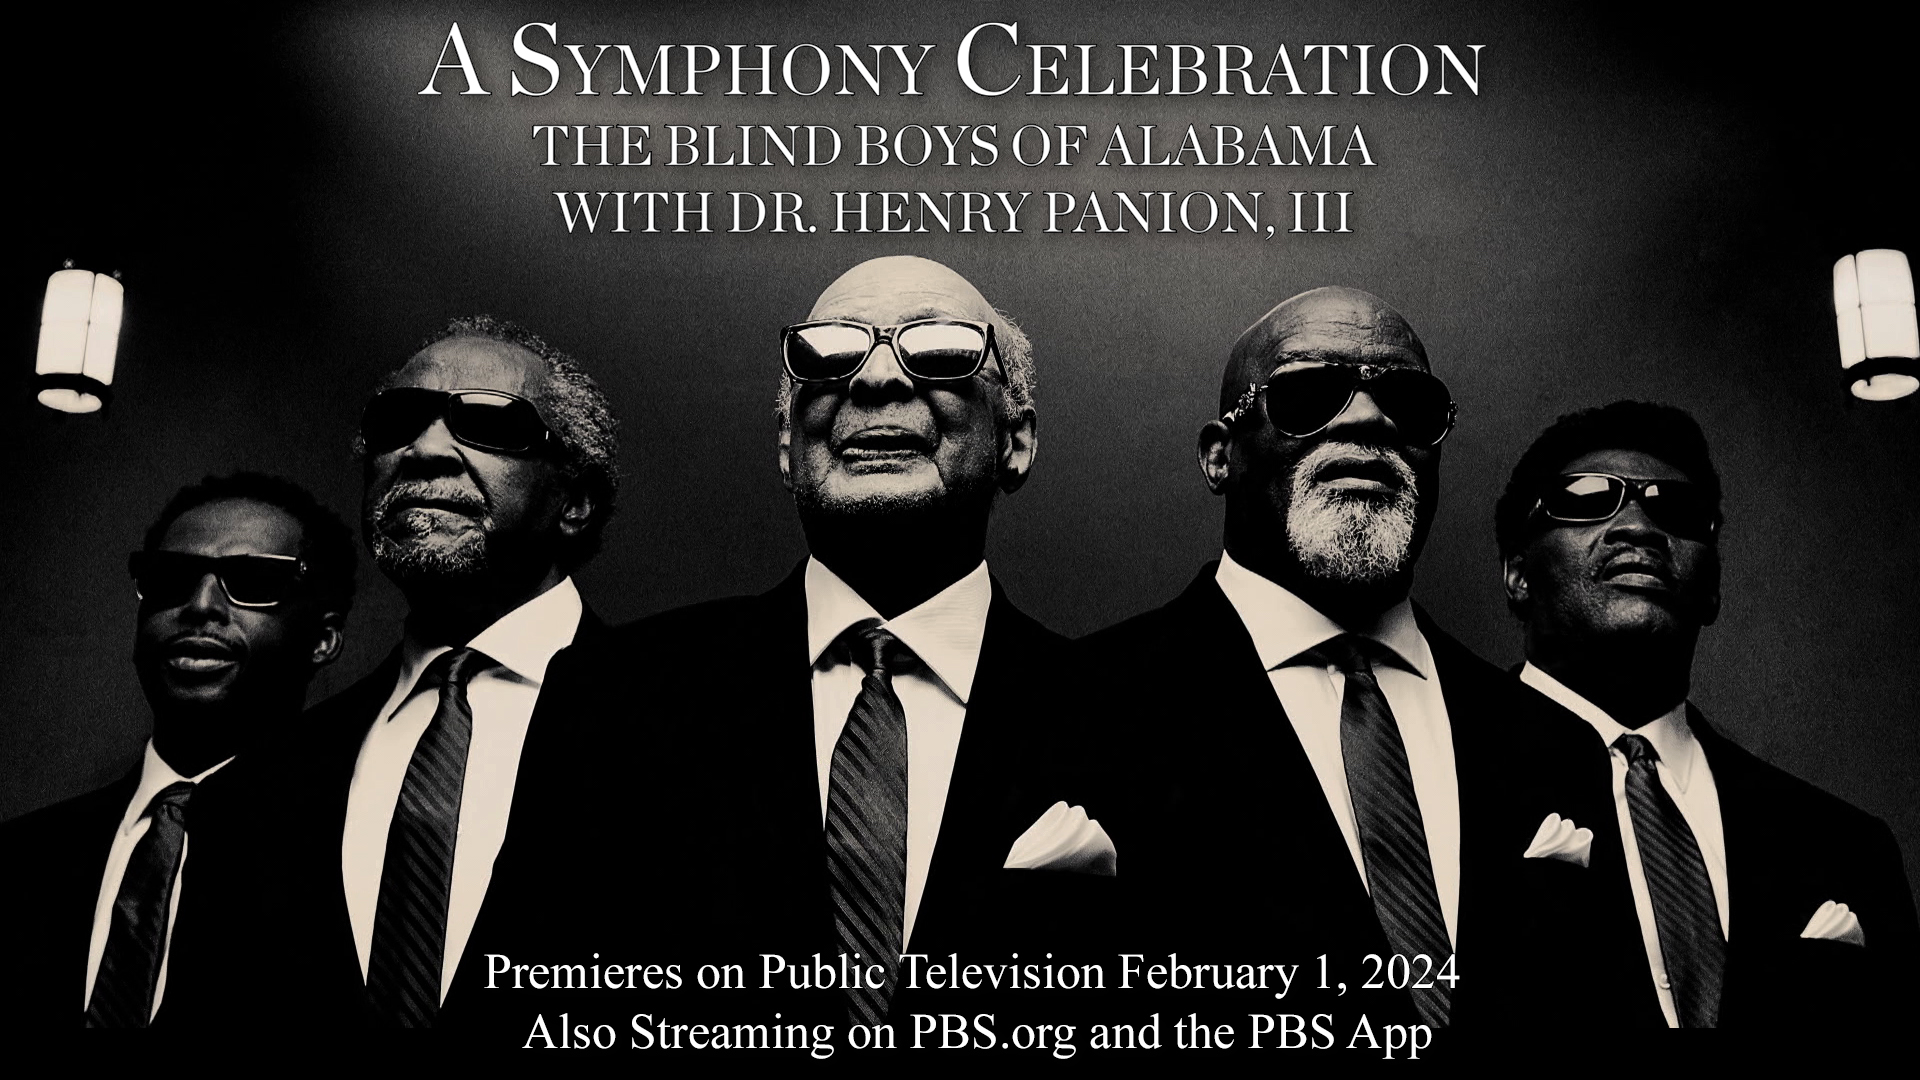 Symphony Celebration General Promo Image 1